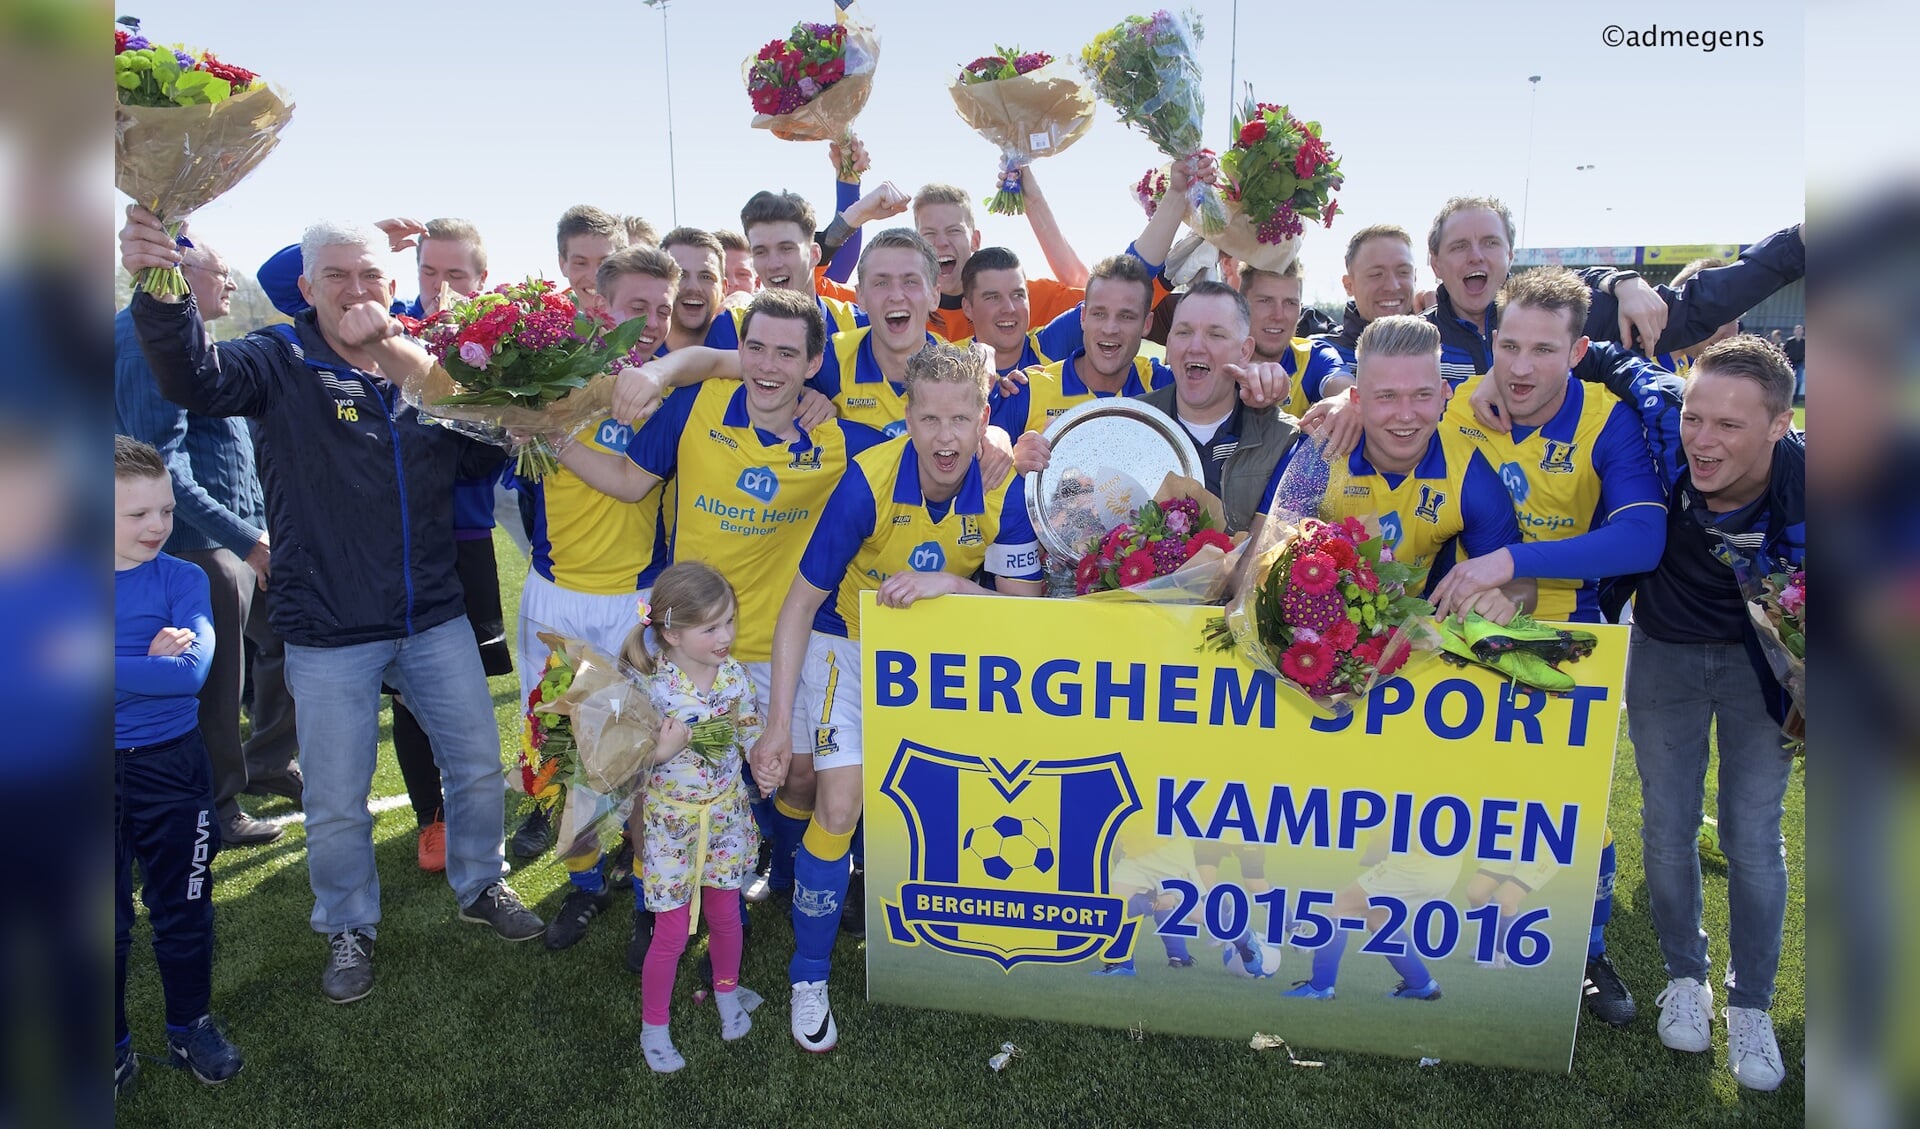 Berghem Sport kampioen. (Foto: Ad Megens)